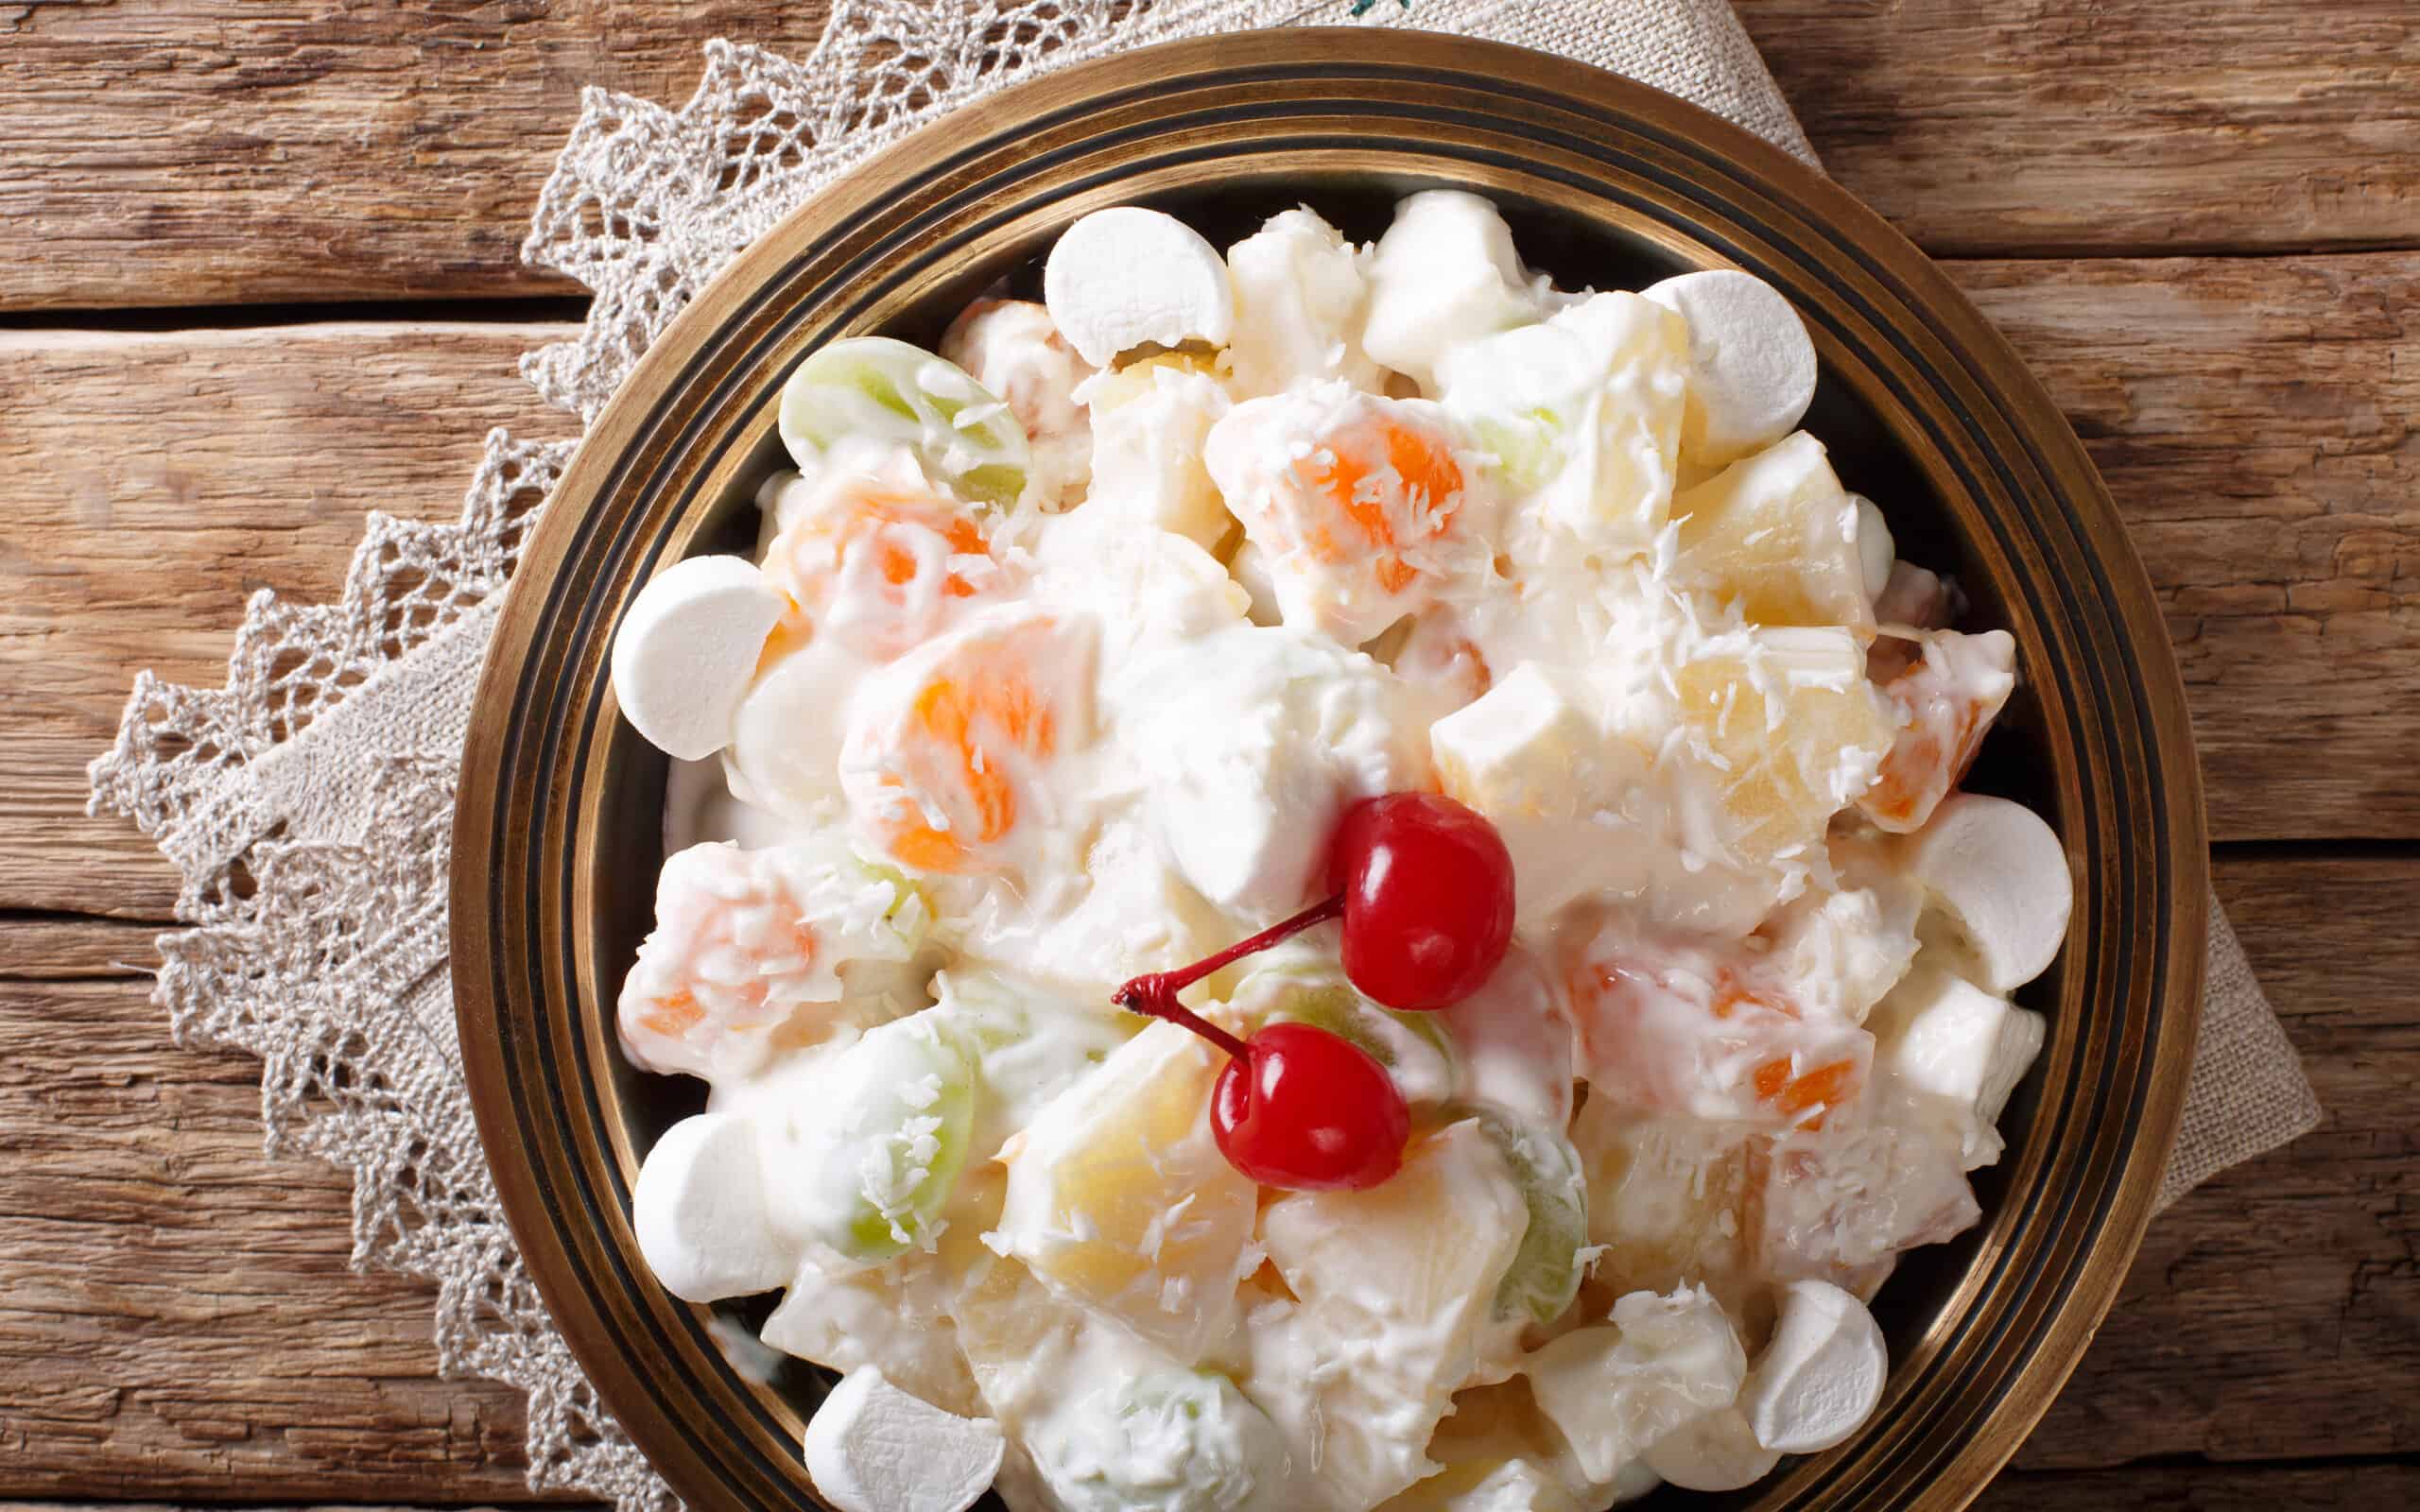 Light fruit salad Ambrosia with marshmallow and vanilla yogurt close-up on a plate.